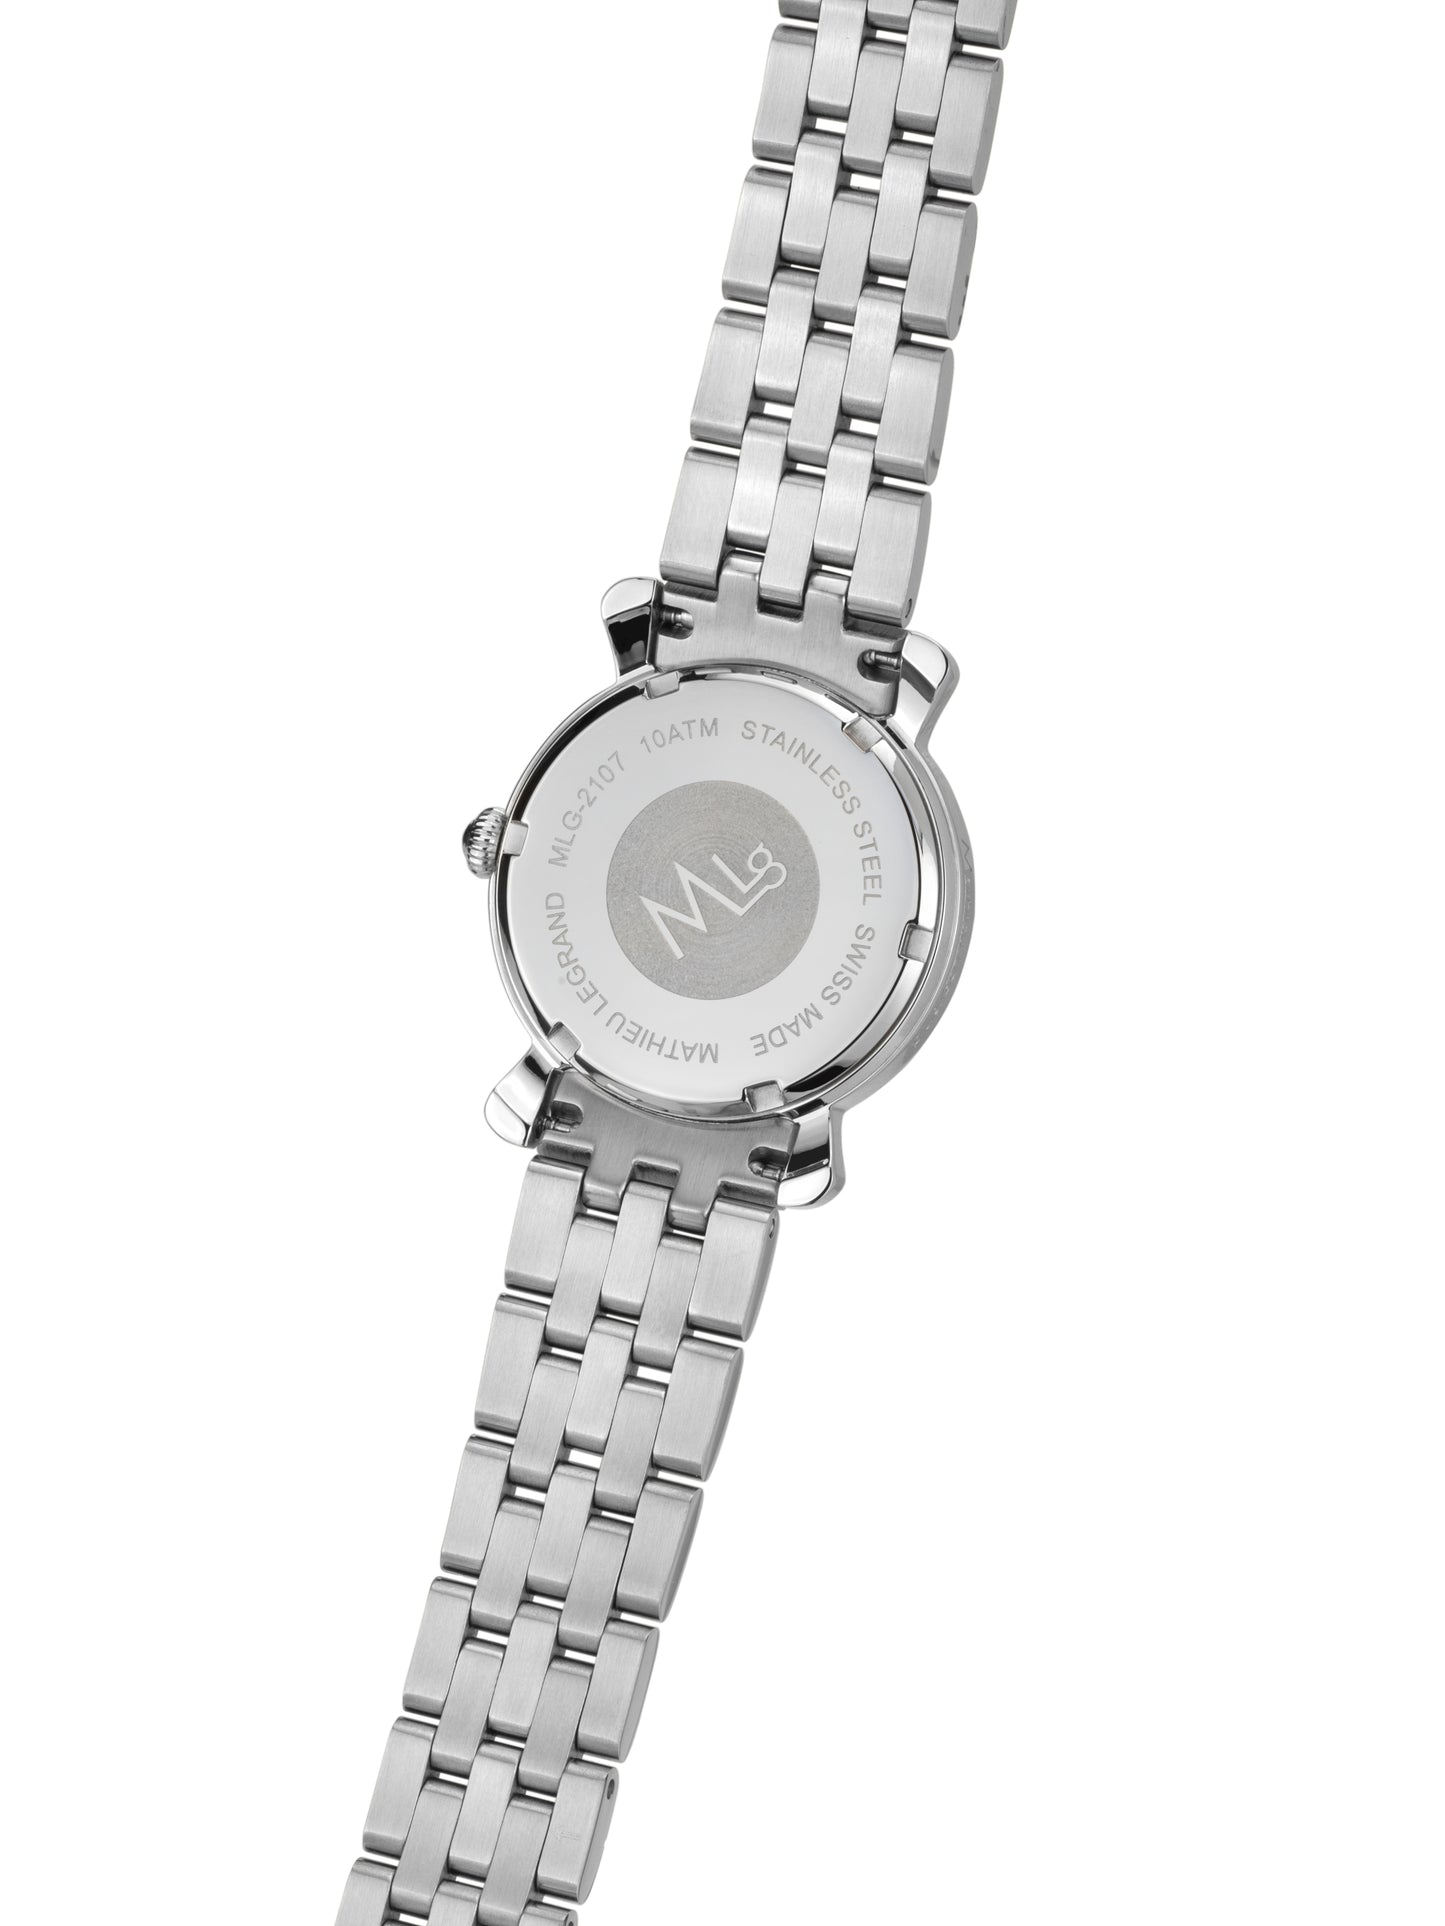 Automatic watches — Les Vagues — Mathieu Legrand — steel silver